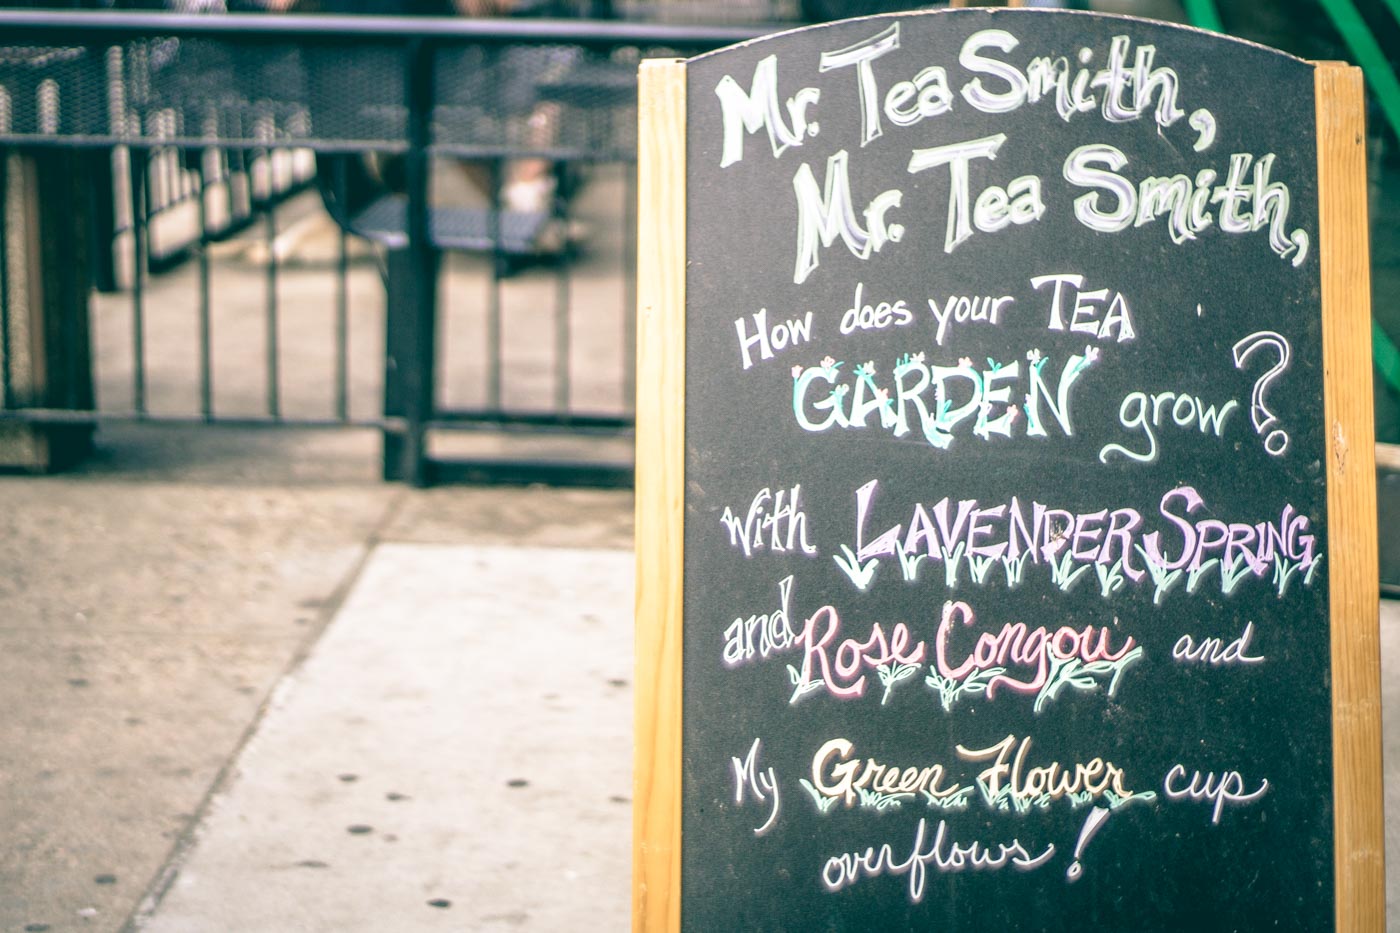 Tea of the Month: The Tea Smith in Omaha, Nebraska